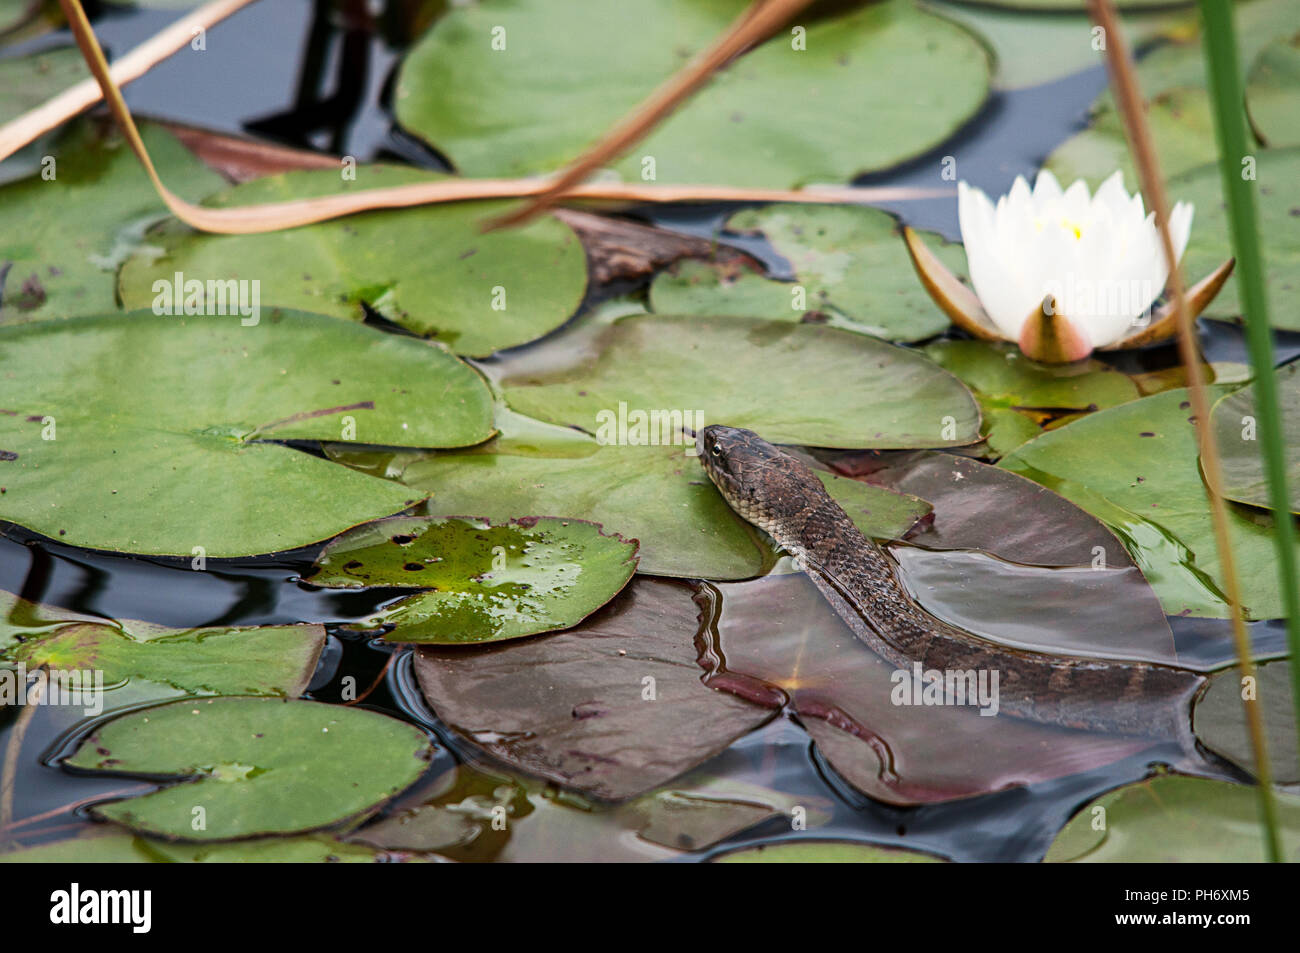 Water snake enjoying its surrounding. Stock Photo